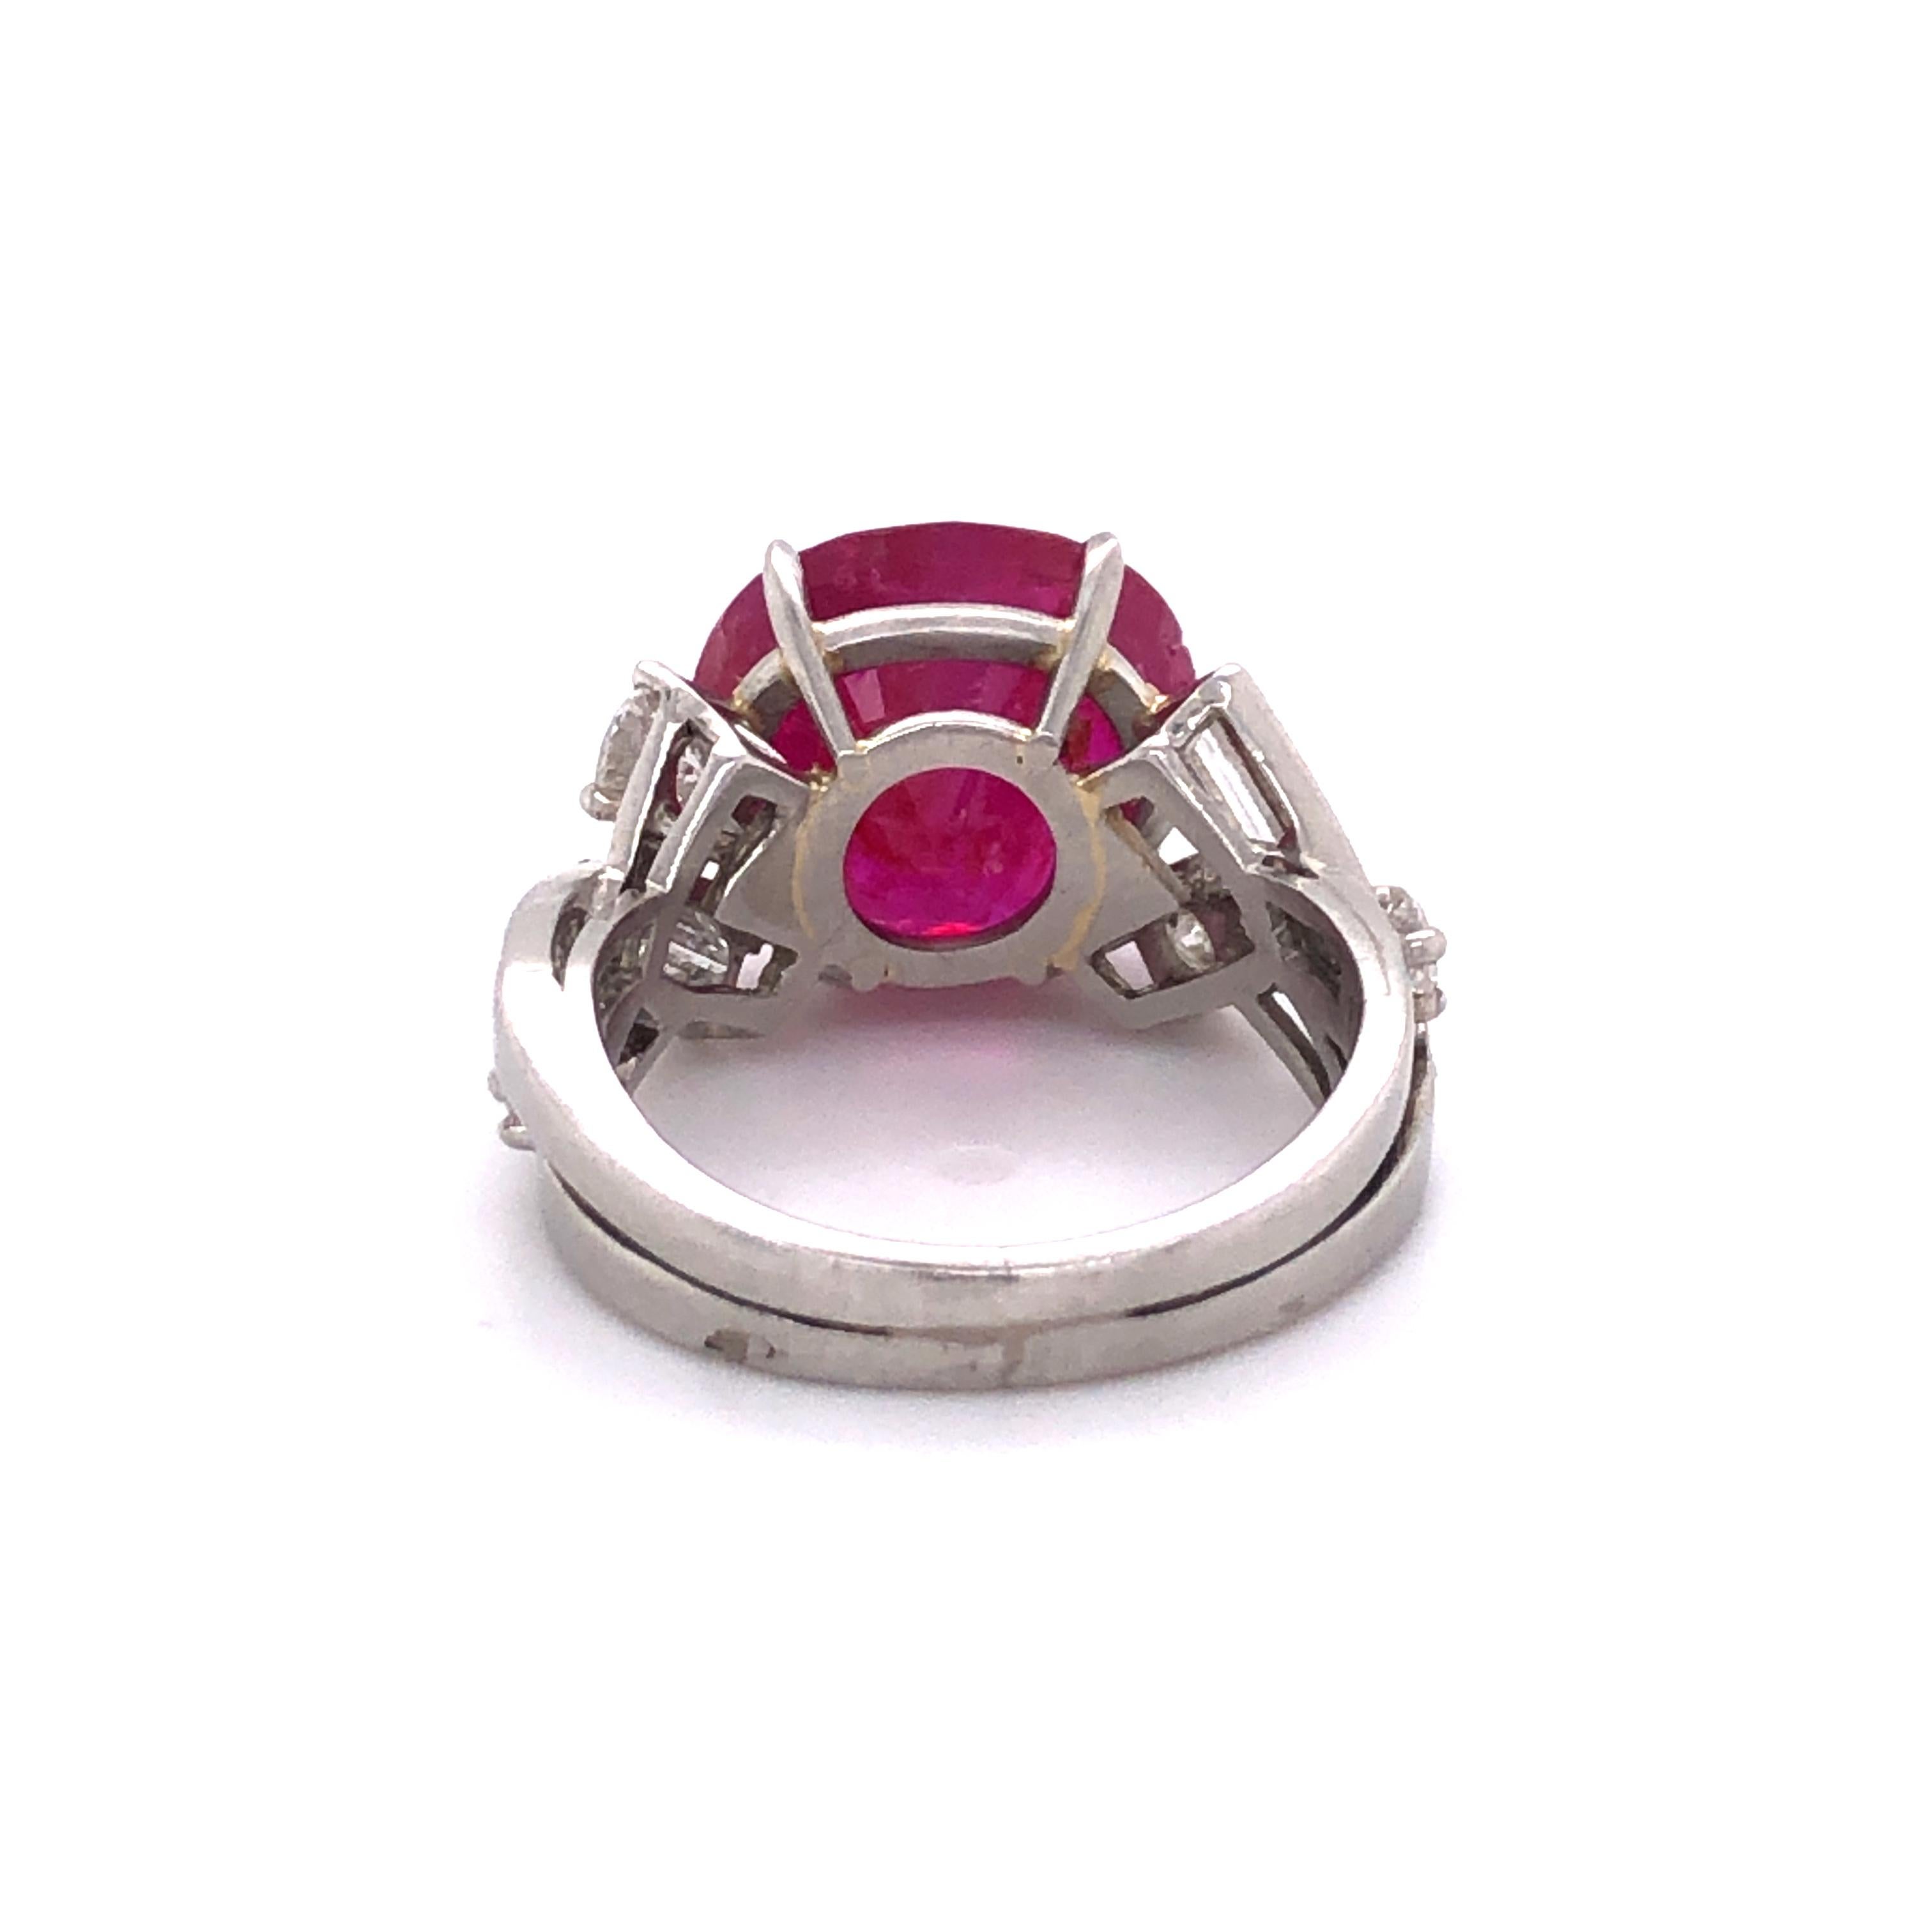 Stunning 10.40 Carat Burma Ruby and Diamond Ring in Platinum 950 1